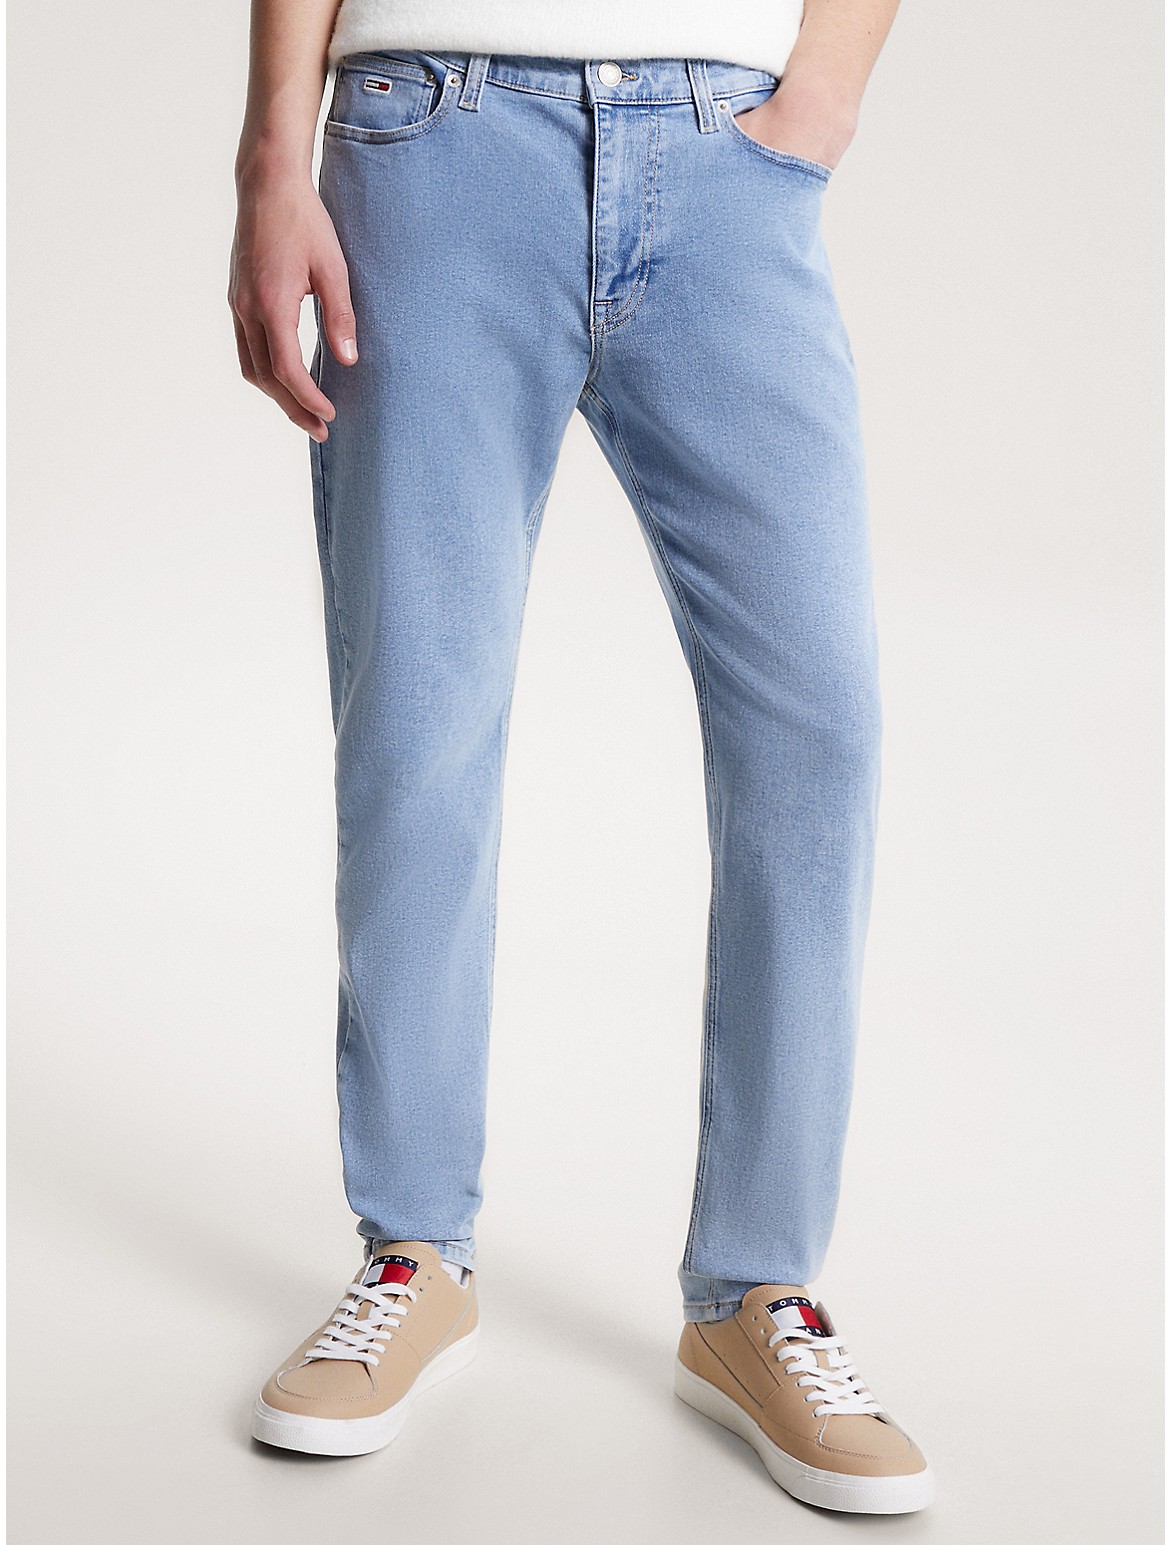 Tommy Hilfiger Men's Skinniest Fit Medium Wash Jean